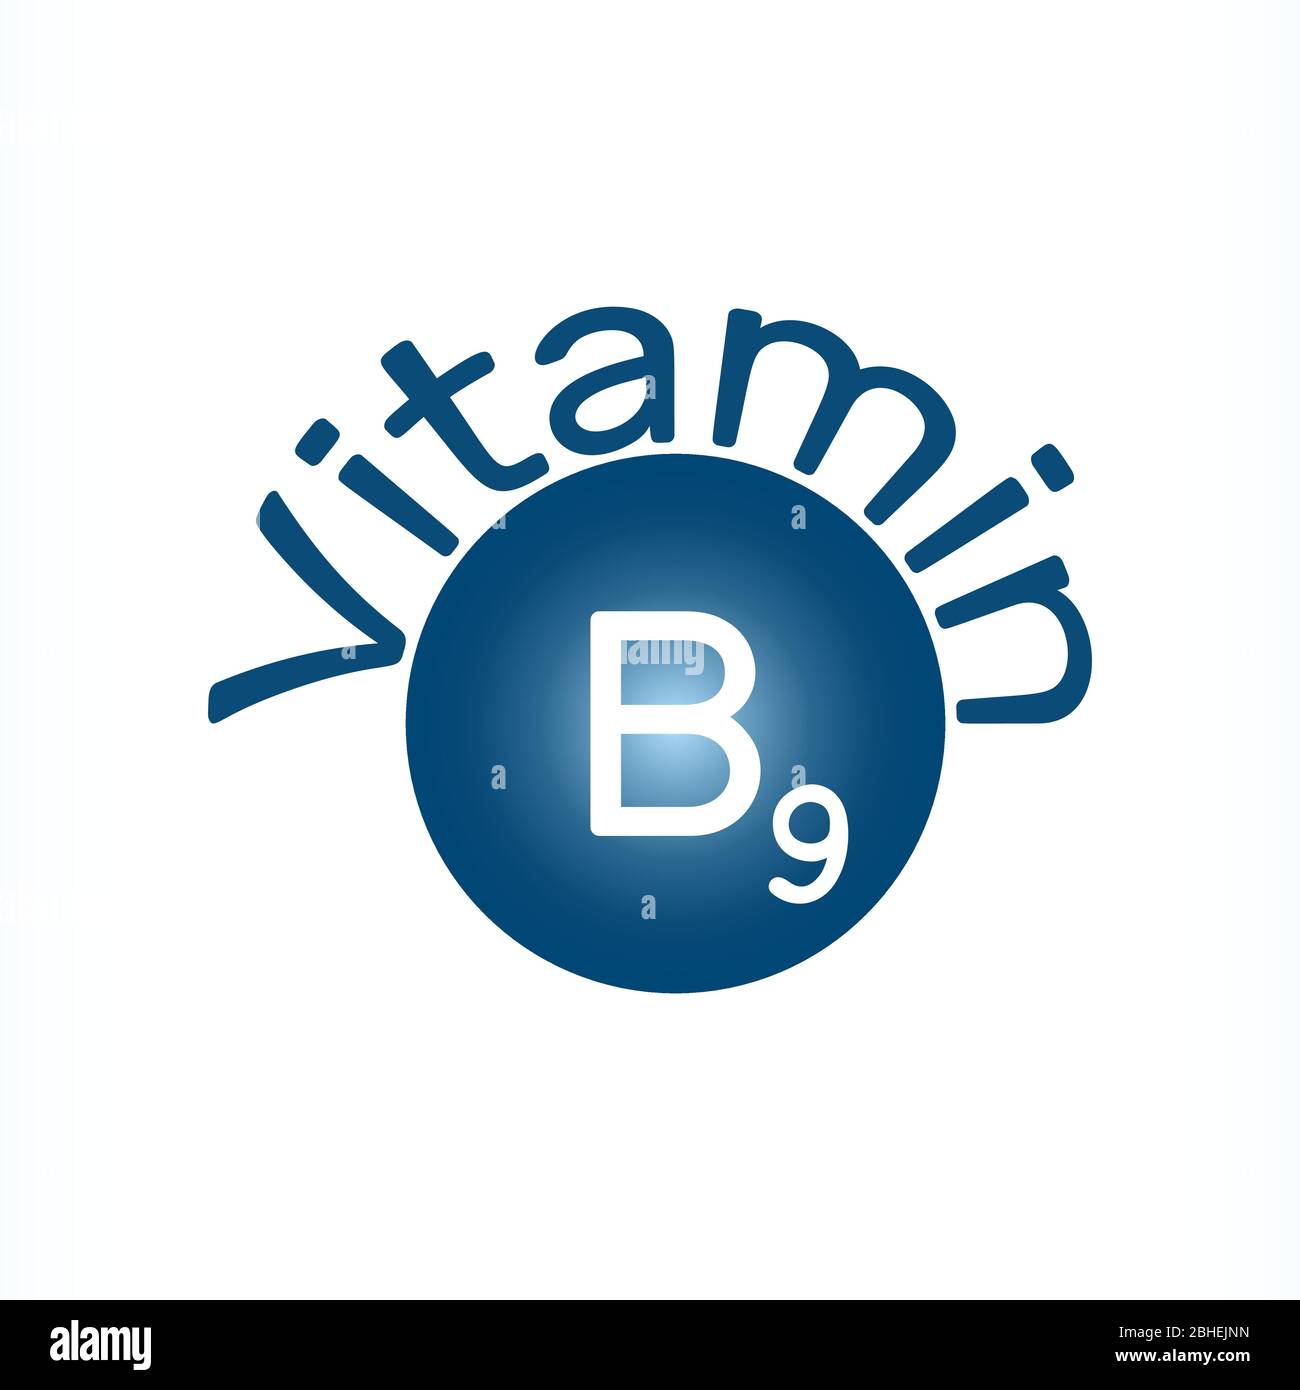 Vitamin B9. Vector icon. Vitamin B9, also called folate or folic acid, often referred to as B-complex vitamins. Vector illustration Stock Vector